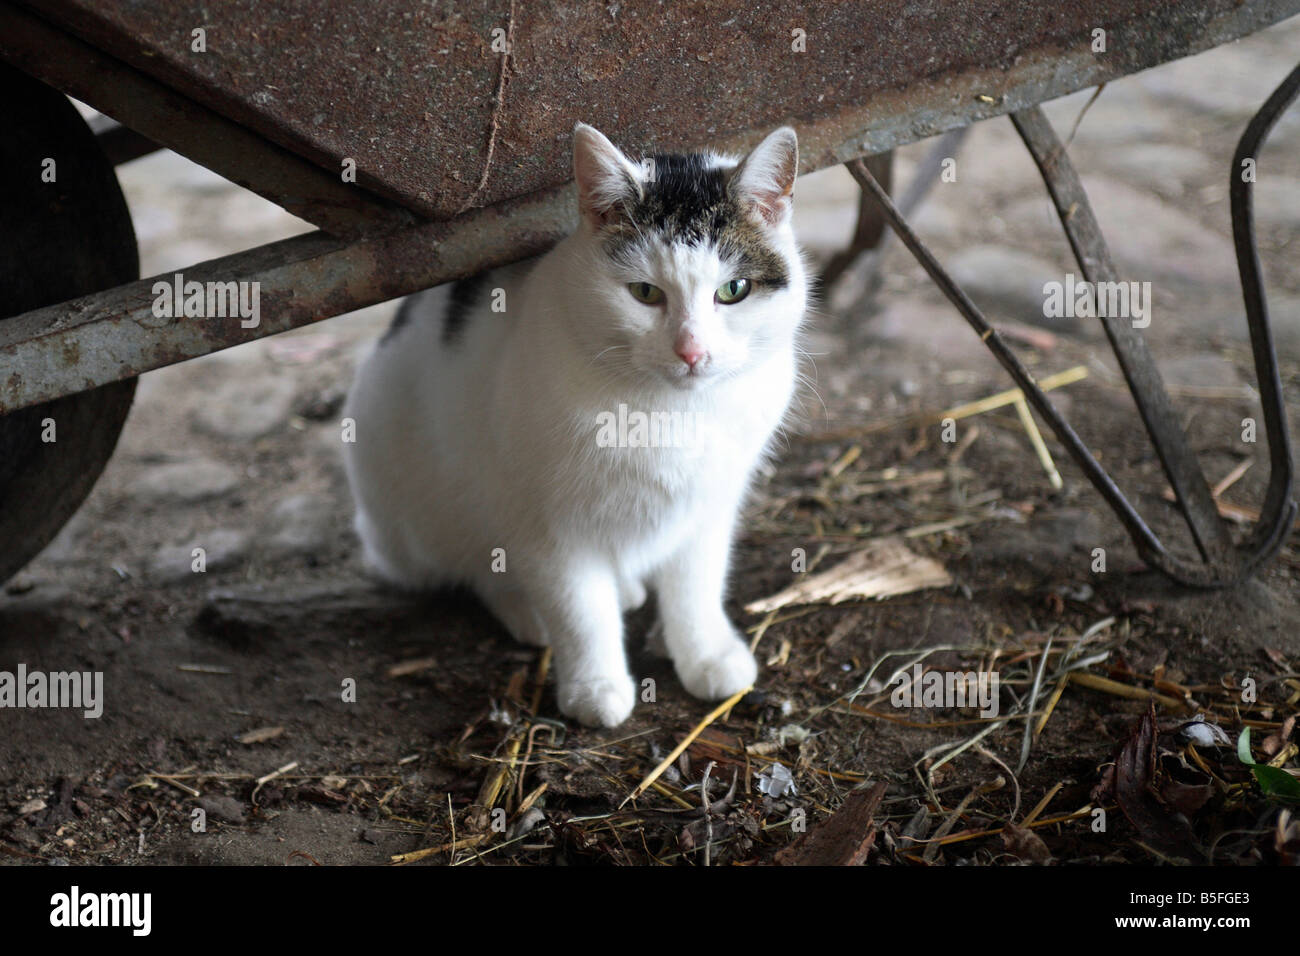 A cat sitting under a barrow Stock Photo